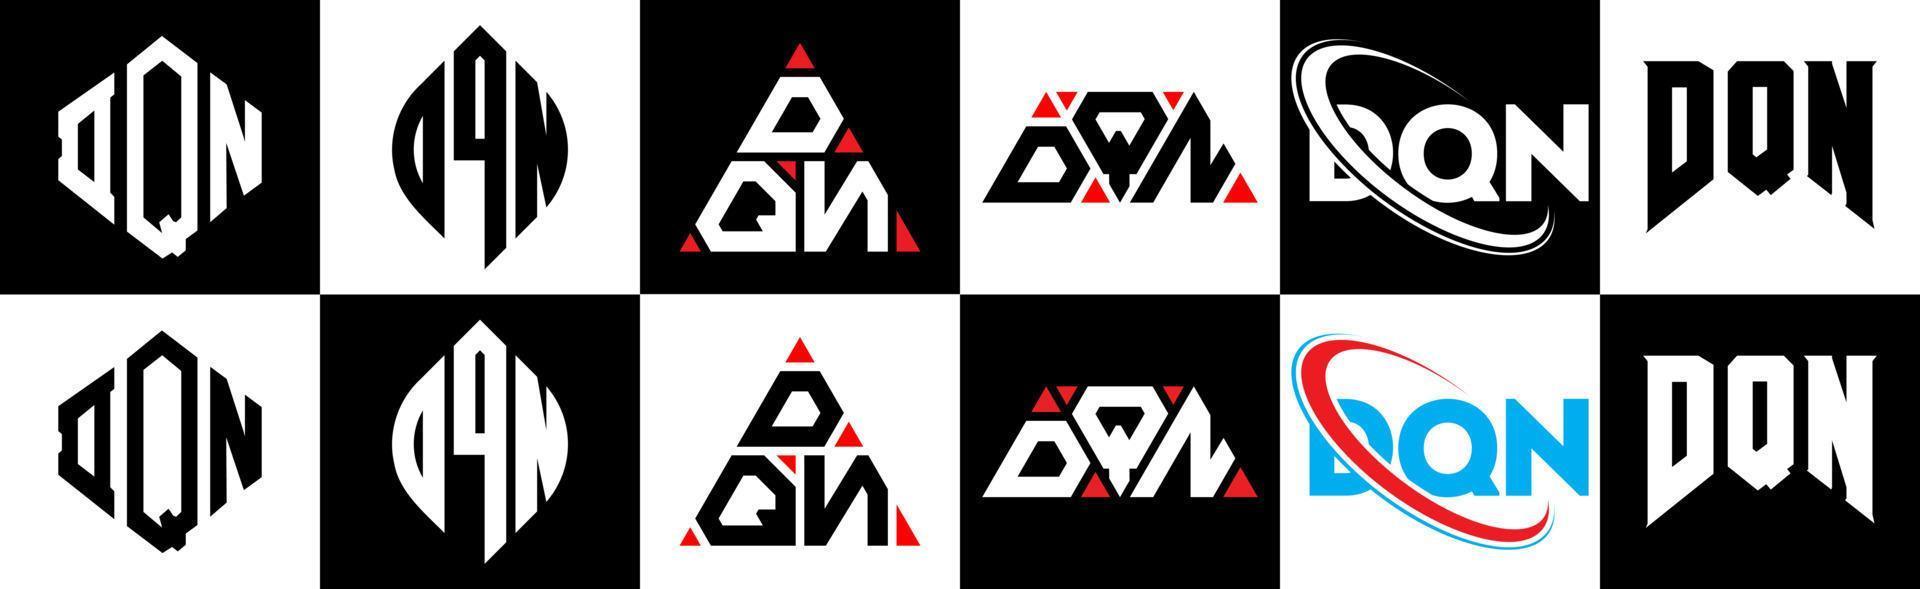 design de logotipo de letra dqn em seis estilo. polígono dqn, círculo, triângulo, hexágono, estilo plano e simples com logotipo de letra de variação de cor preto e branco definido em uma prancheta. dqn logotipo minimalista e clássico vetor